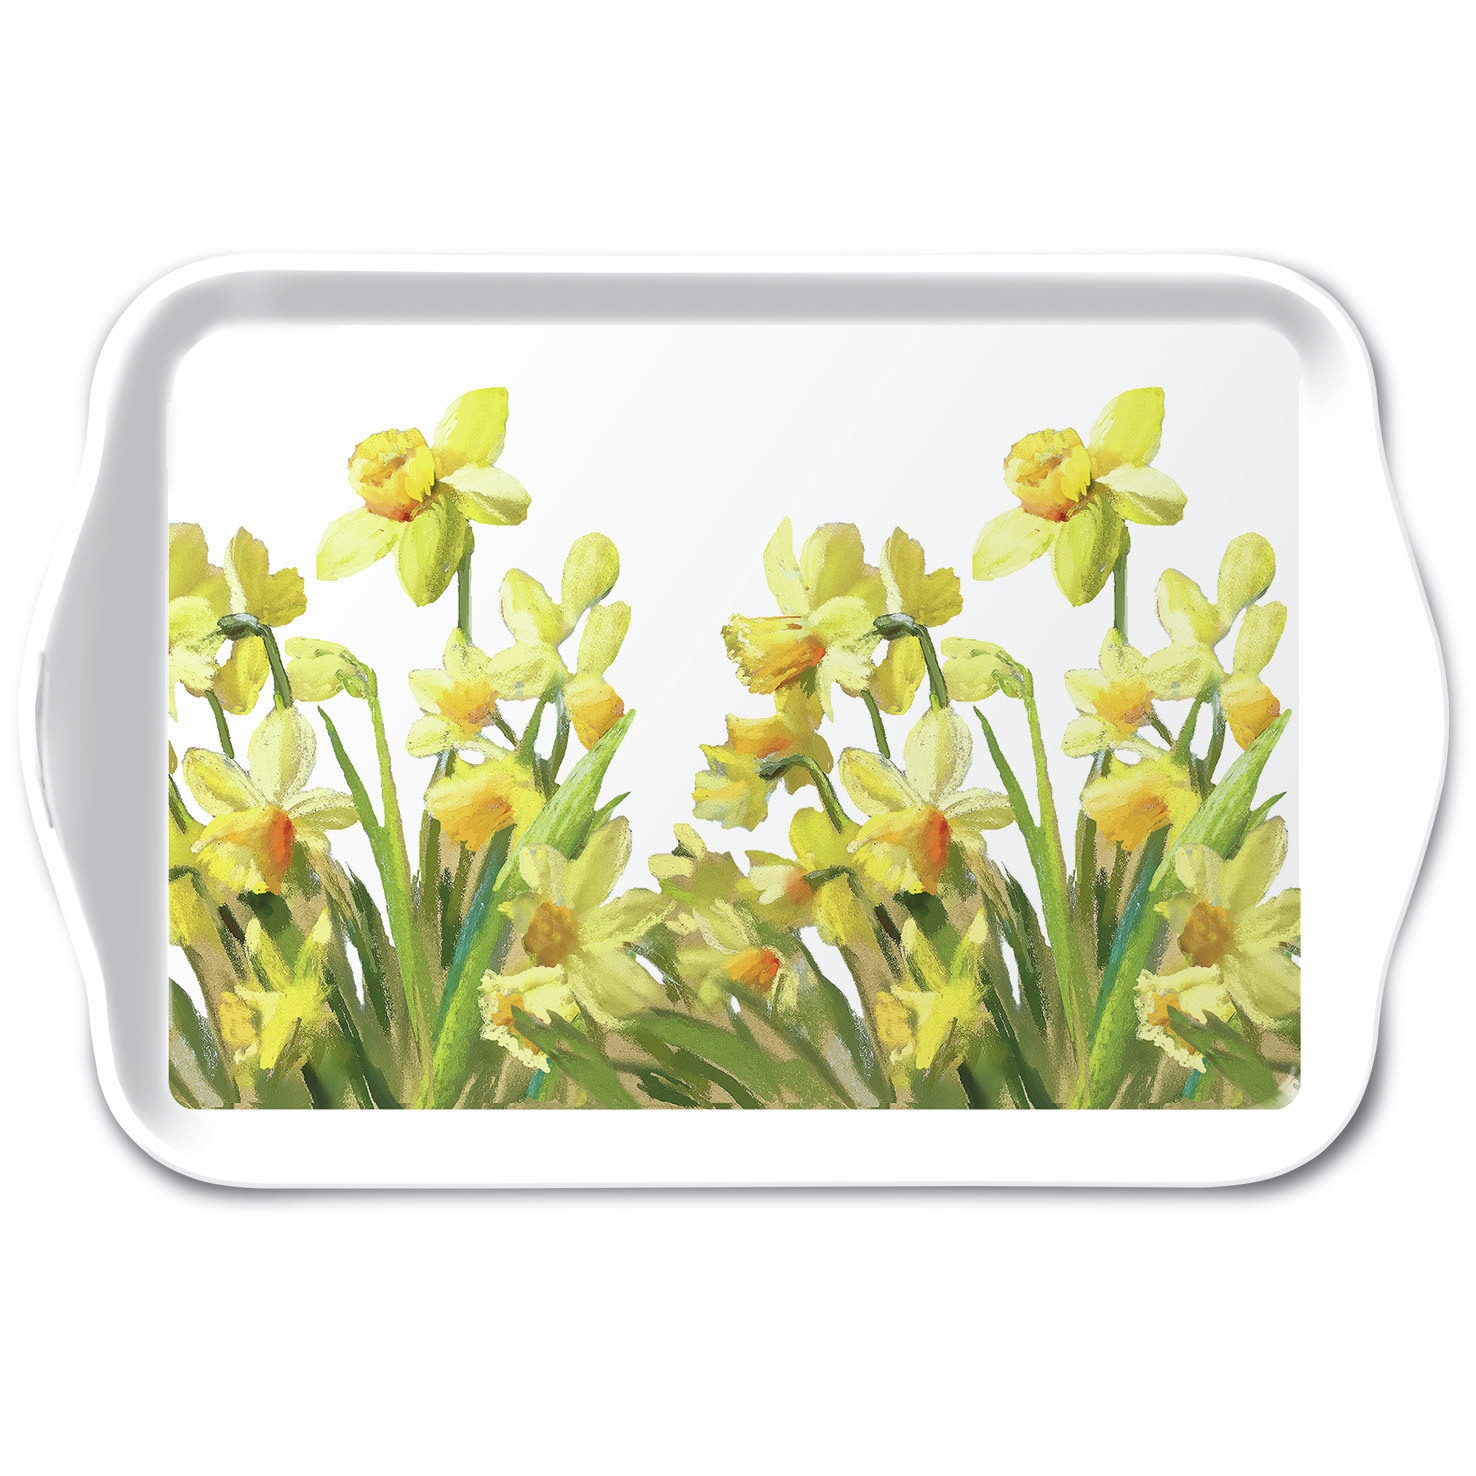 bandeja - Tray Melamine 13x21 cm Golden Daffodils